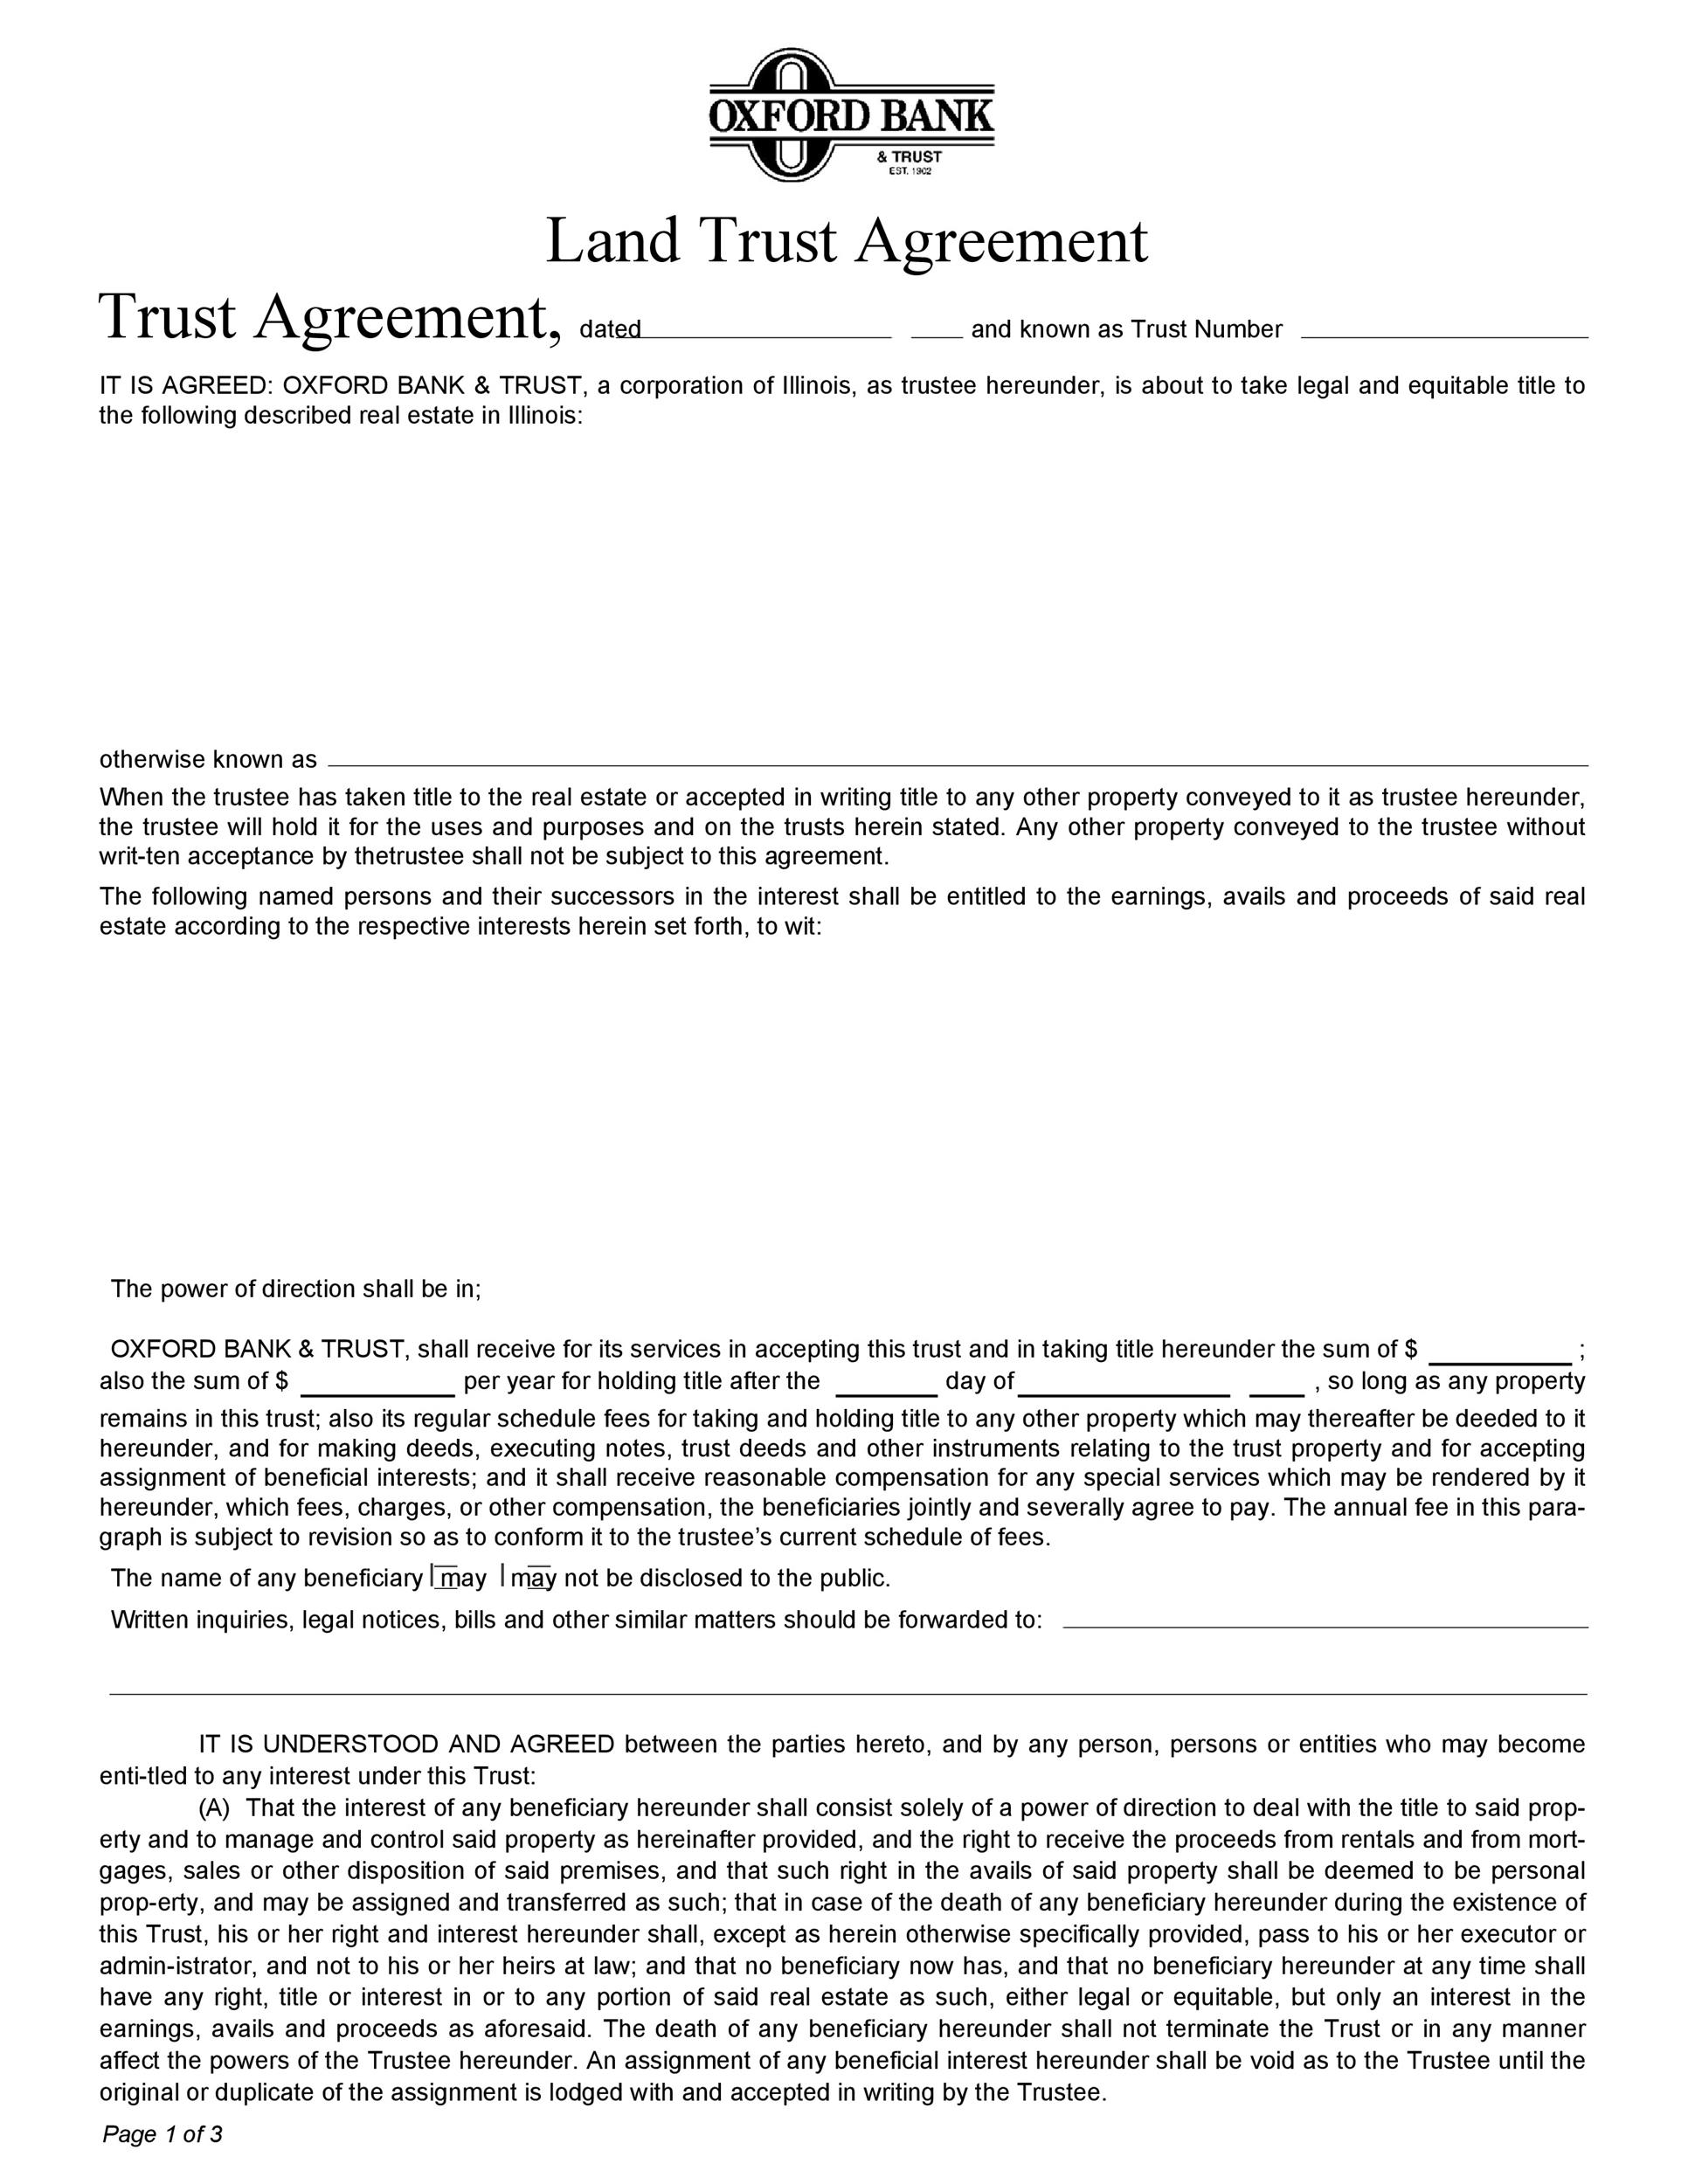 50 Professional Trust Agreement Templates Forms ᐅ TemplateLab